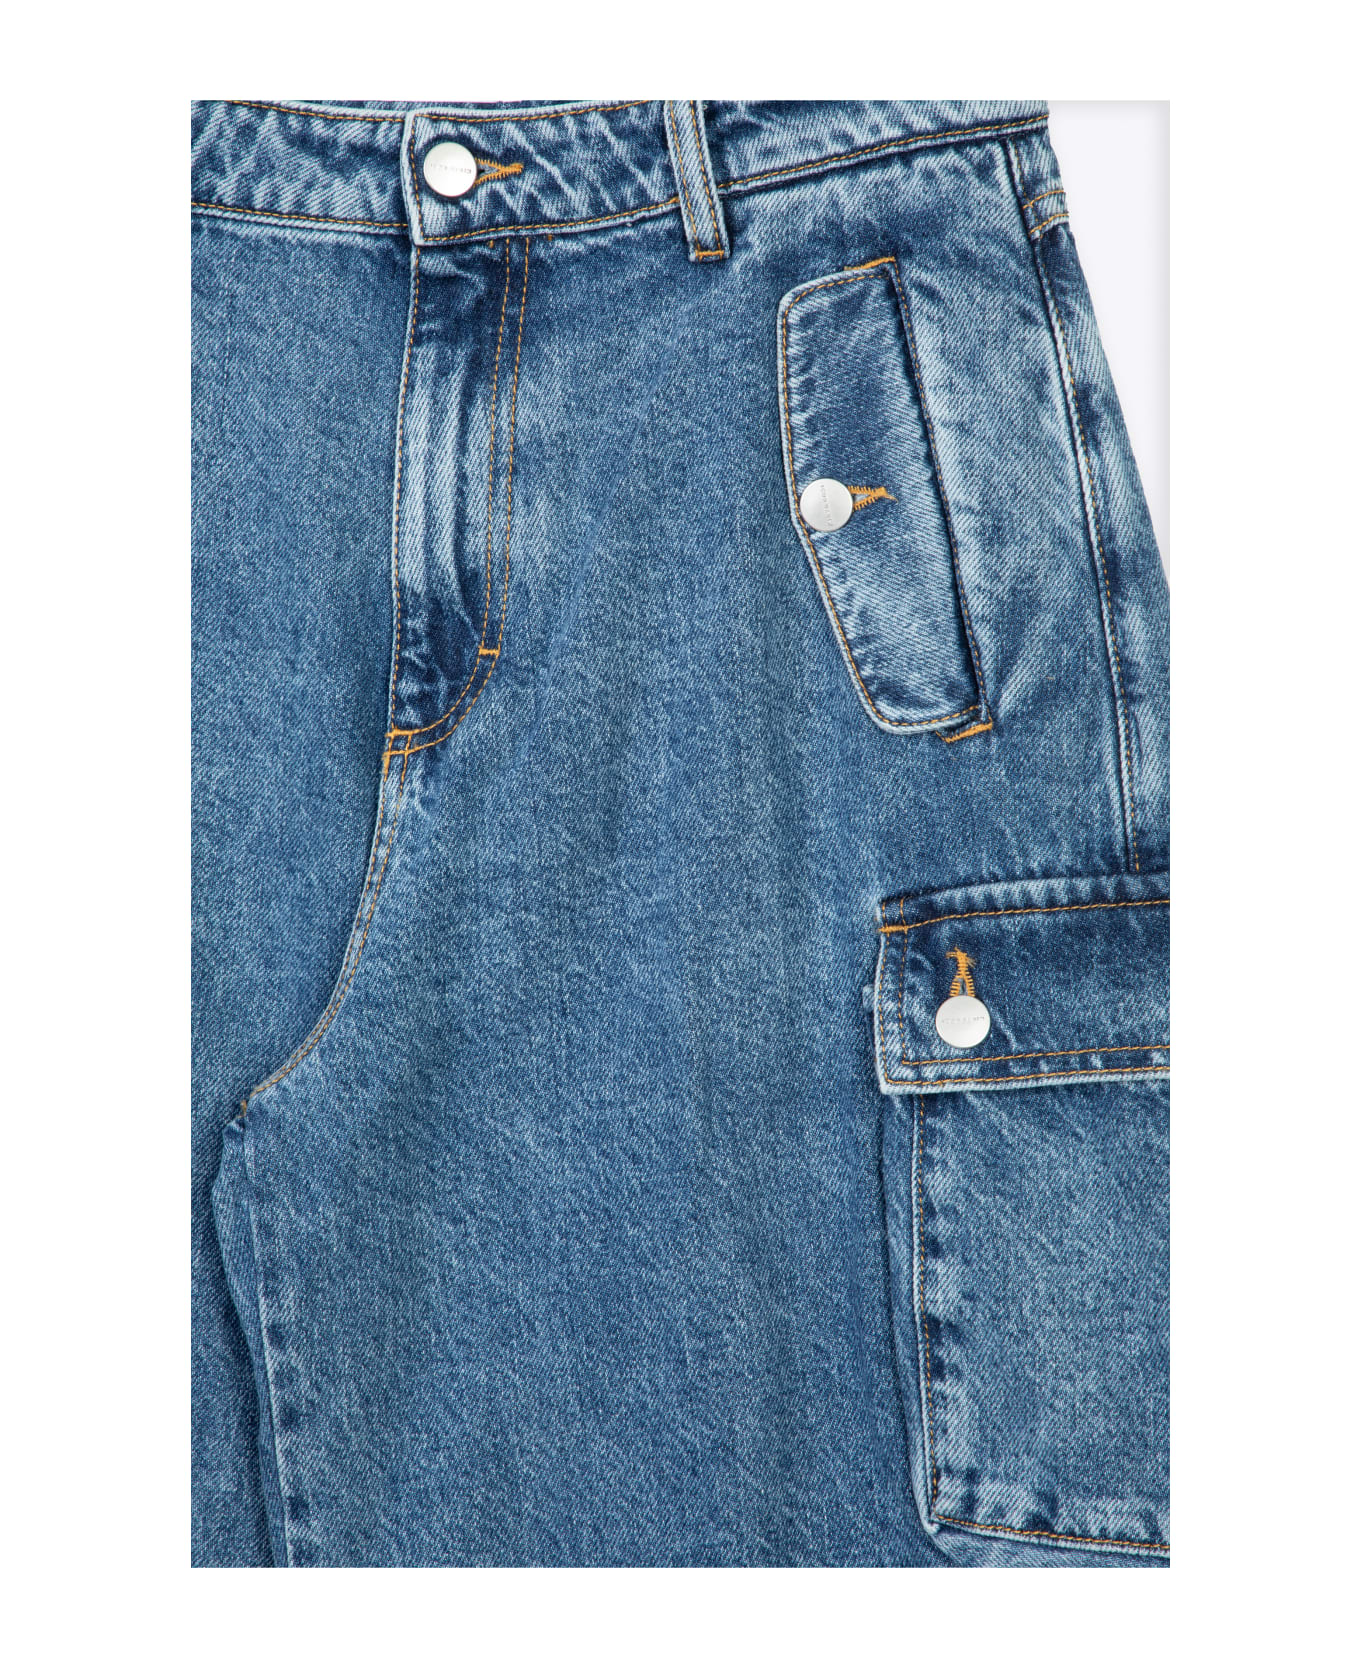 Icon Denim Woman Jeans Light blue denim baggy cargo pant - Rosalia - Denim blu